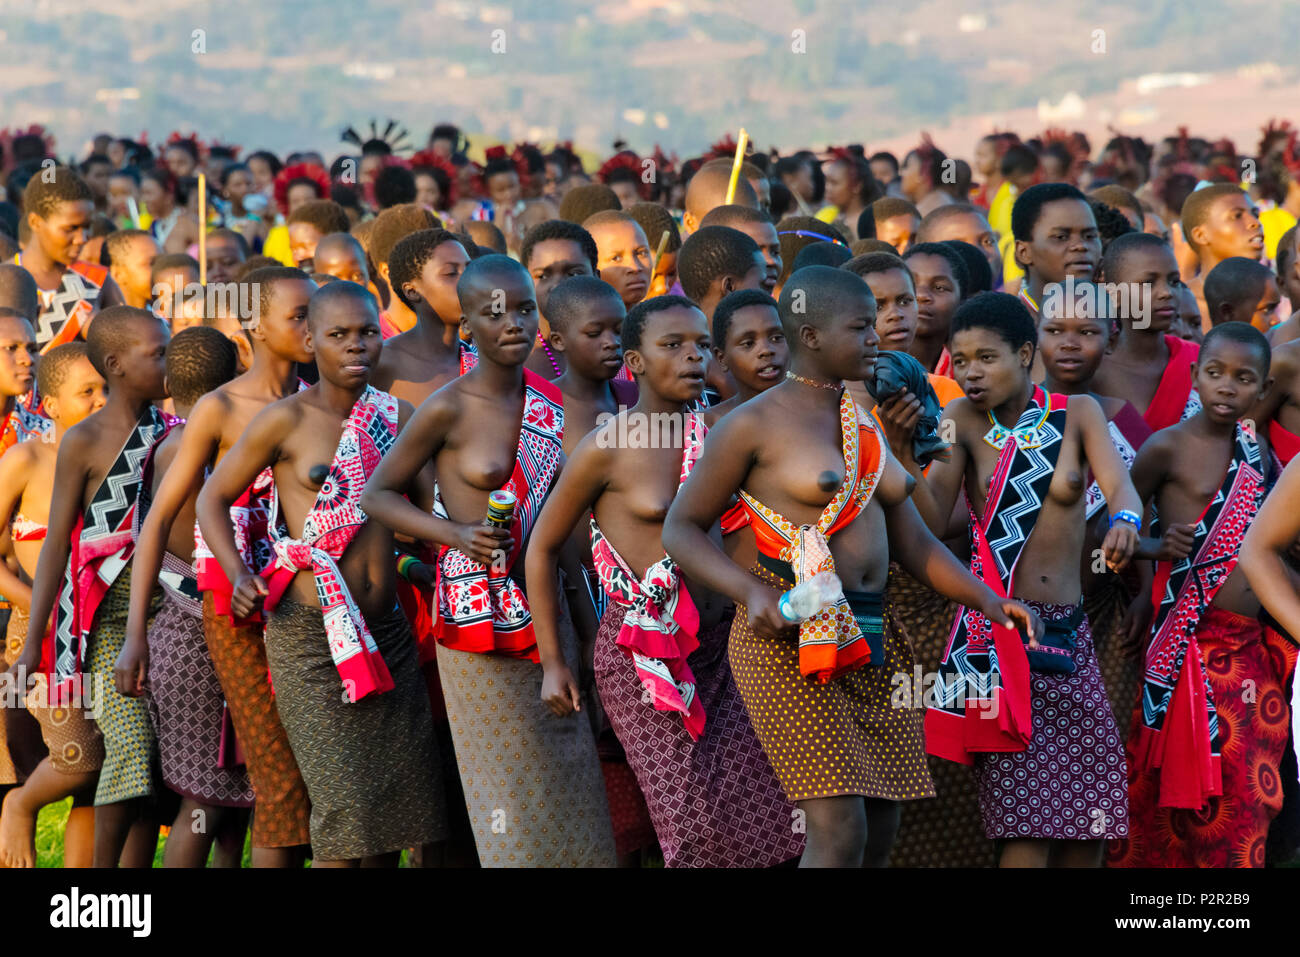 Défilé De Filles Swazi à Umhlanga Reed Dance Festival Au Swaziland Photo Stock Alamy 